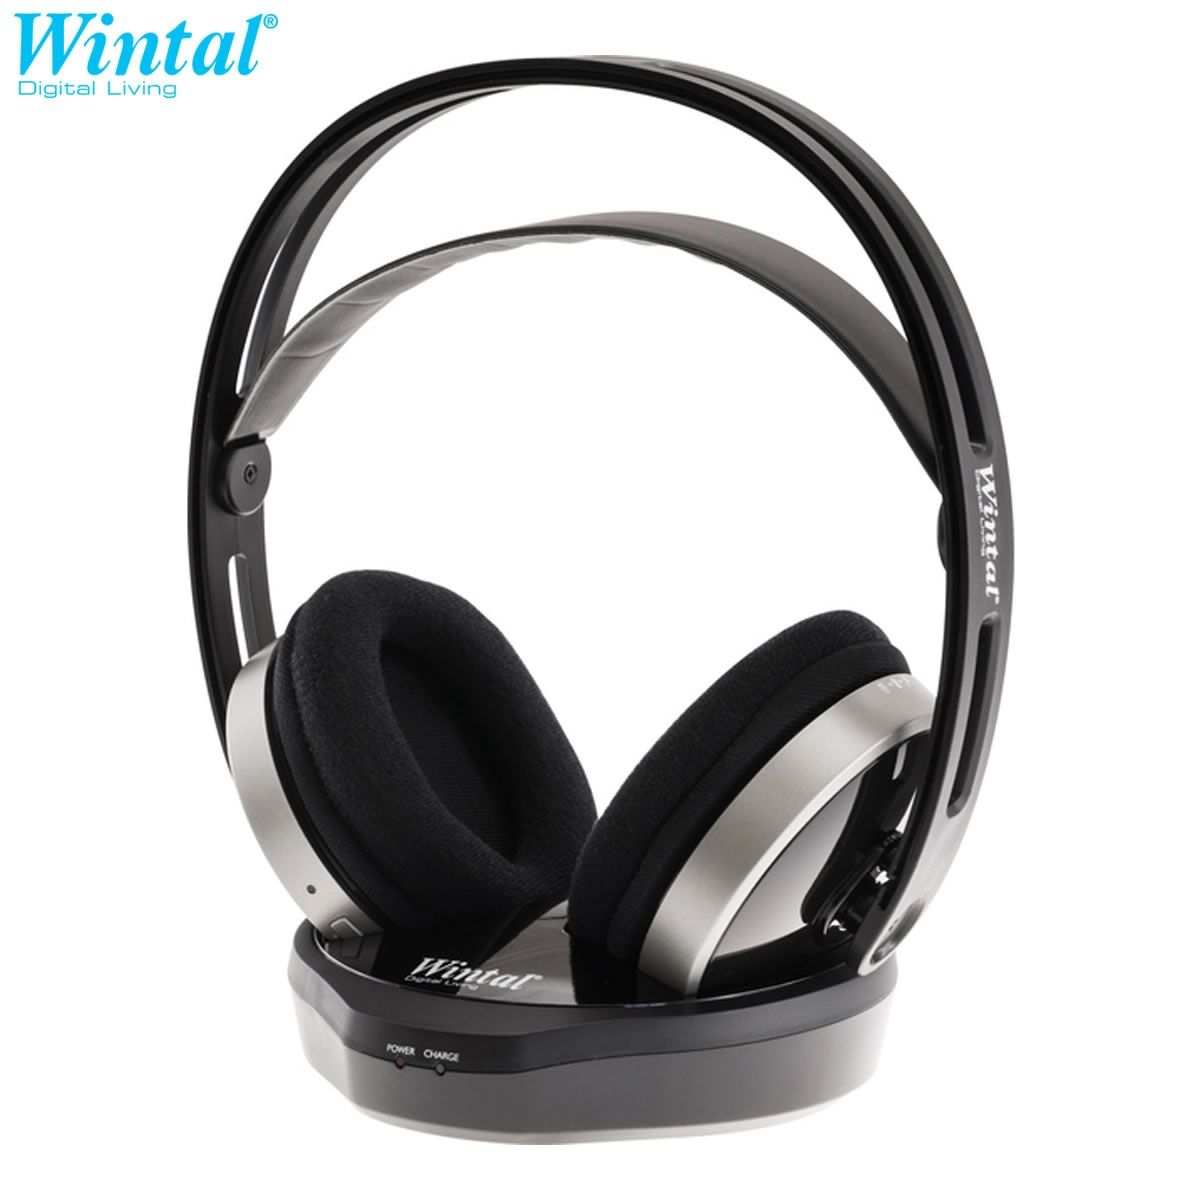 Wintal Digital Wireless Headphones